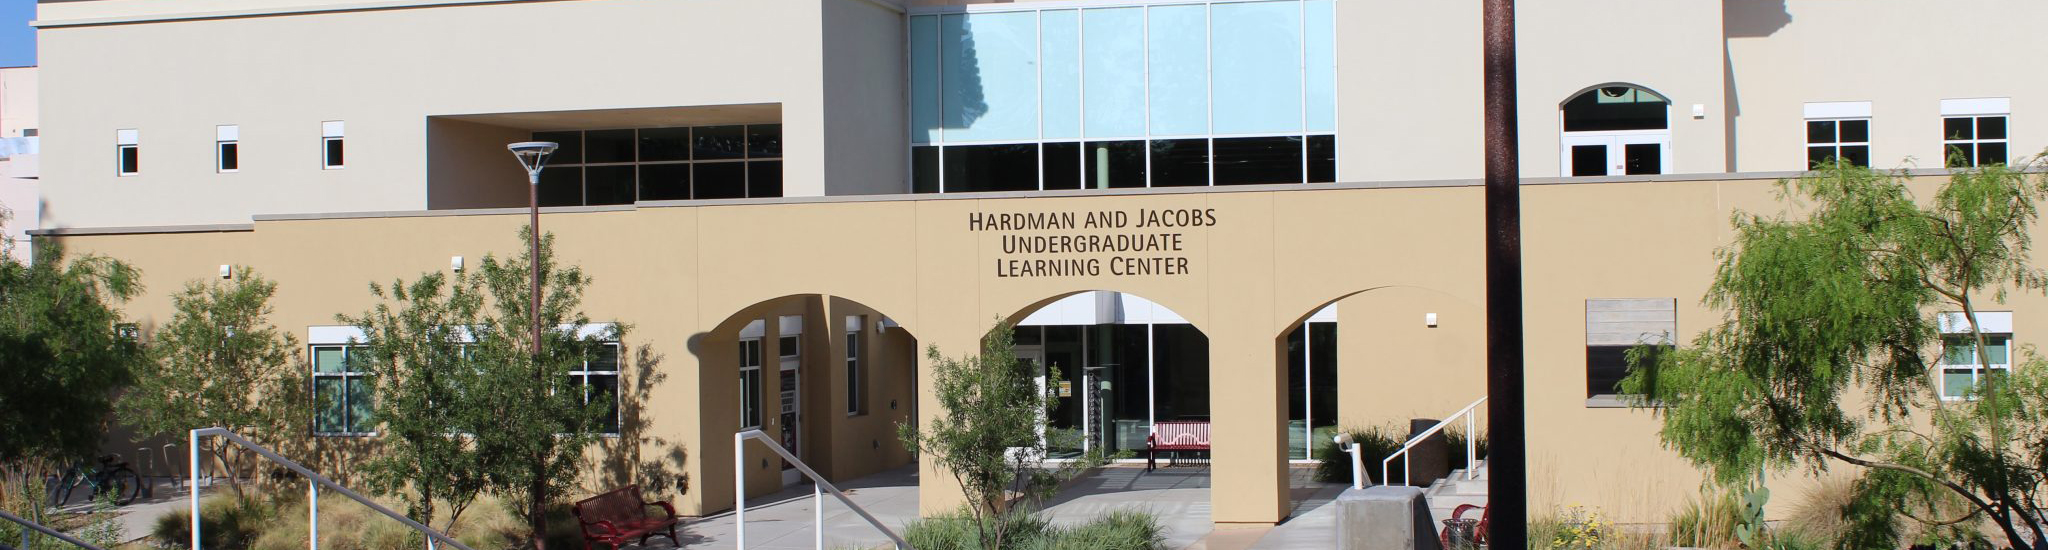 The Hardman & Jacobs Undergraduate Learning Center